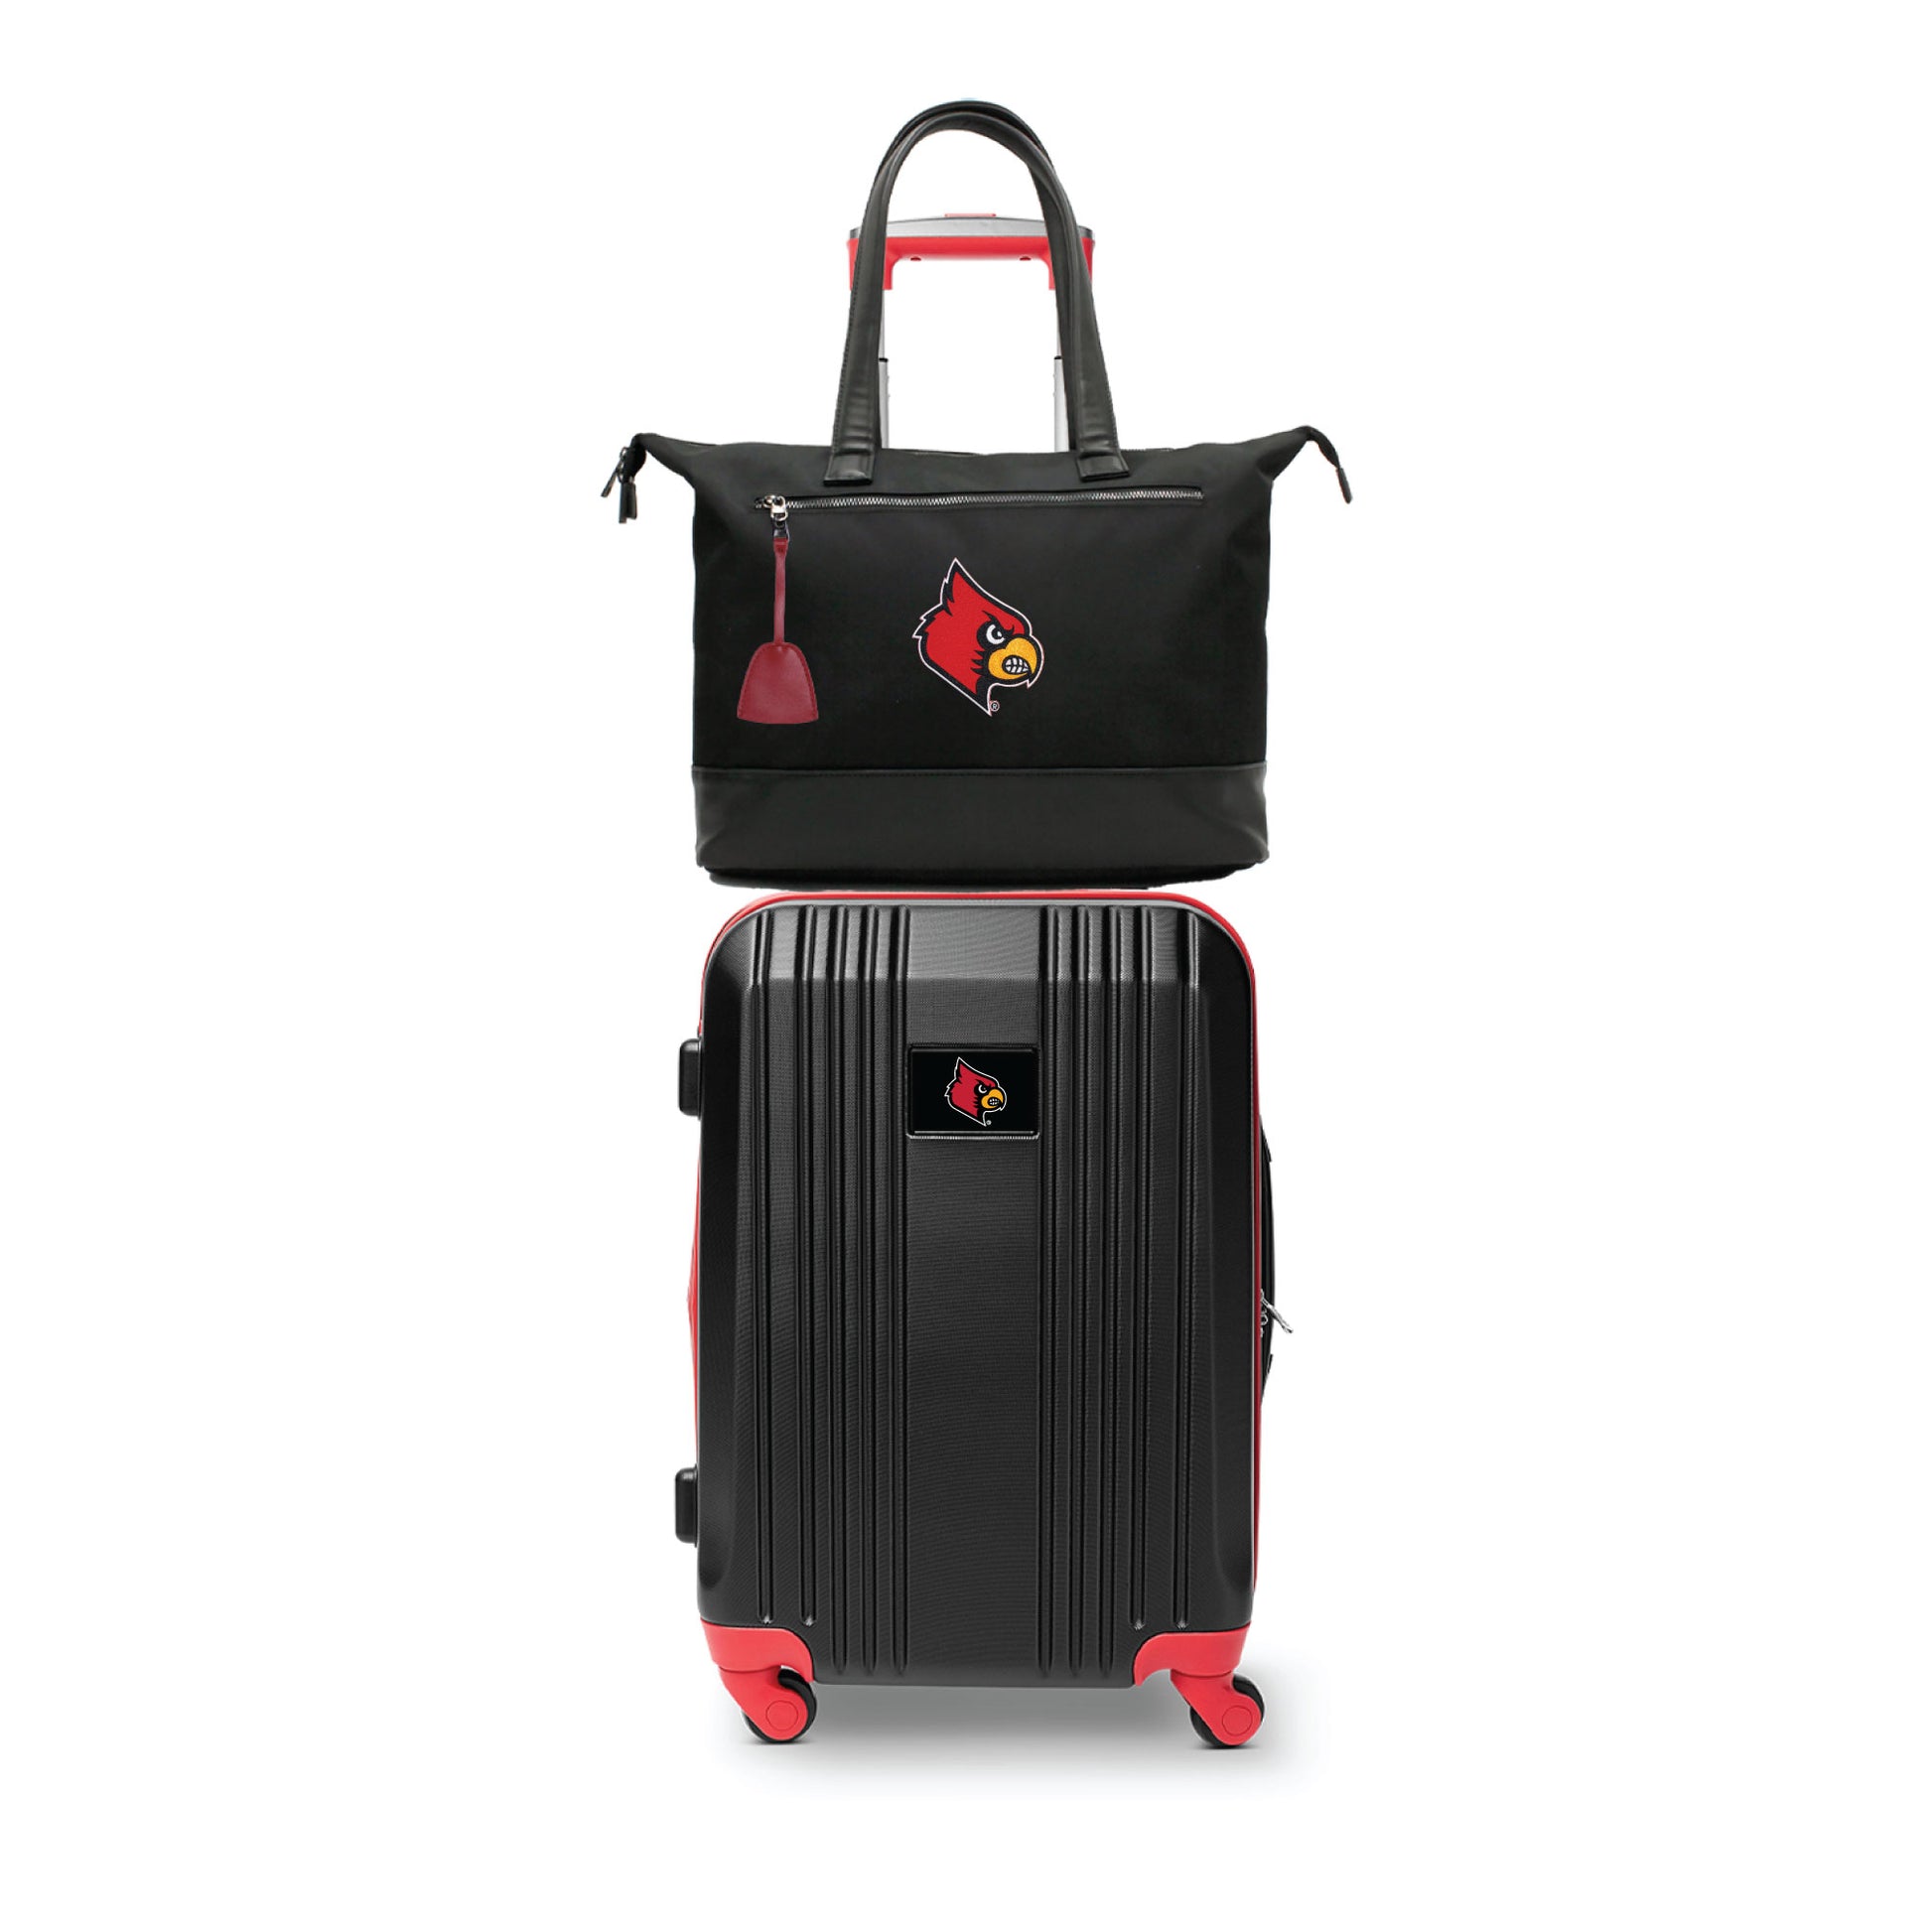 Louisville Cardinals Premium Laptop Tote Bag and Luggage Set